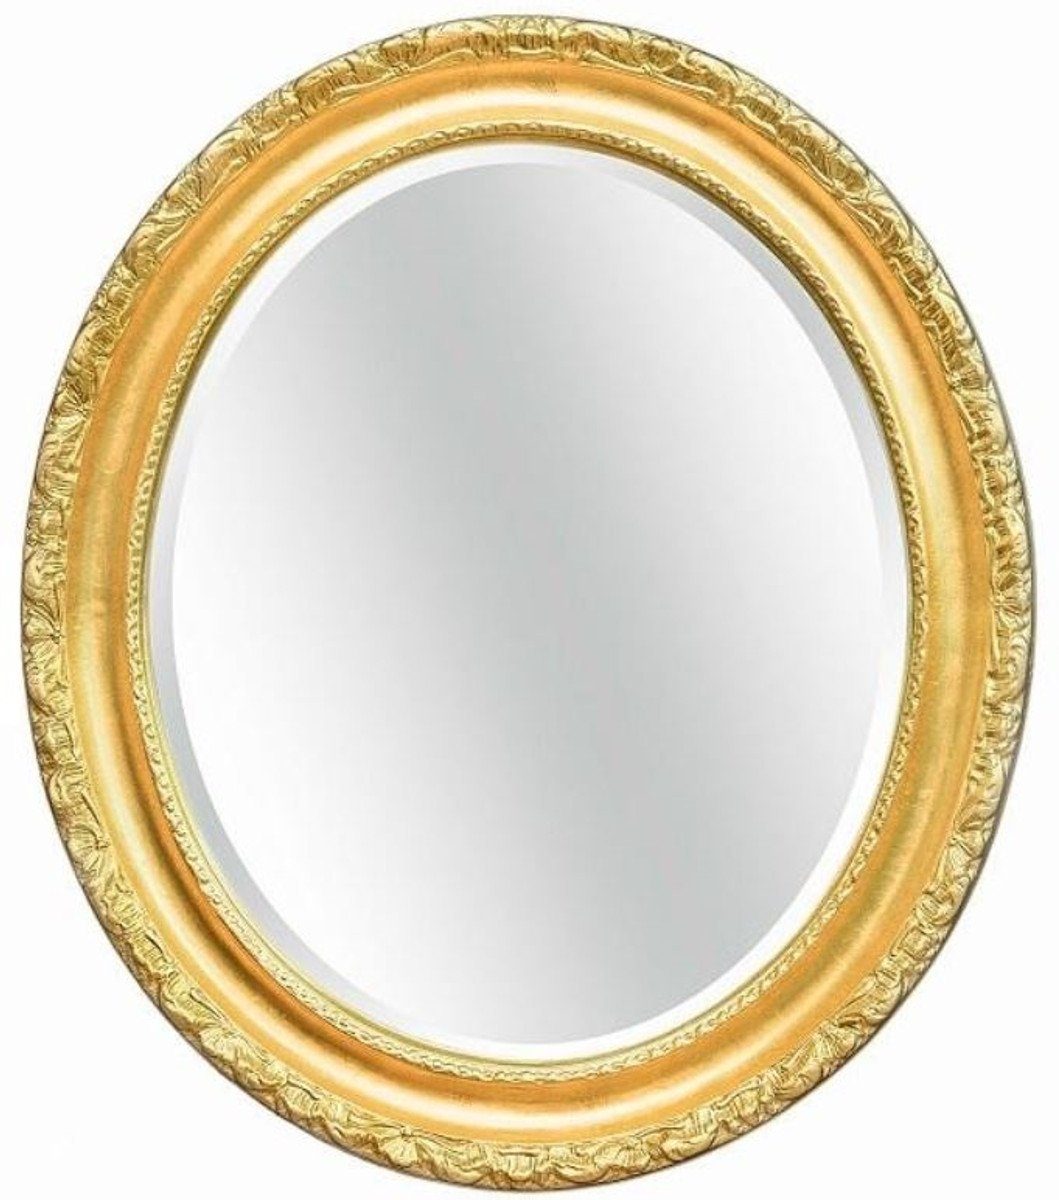 Casa Padrino Barockspiegel Luxus Barock Spiegel Gold 64 x 6 x H. 84 cm - Ovaler Wandspiegel im Barockstil - Barock Möbel